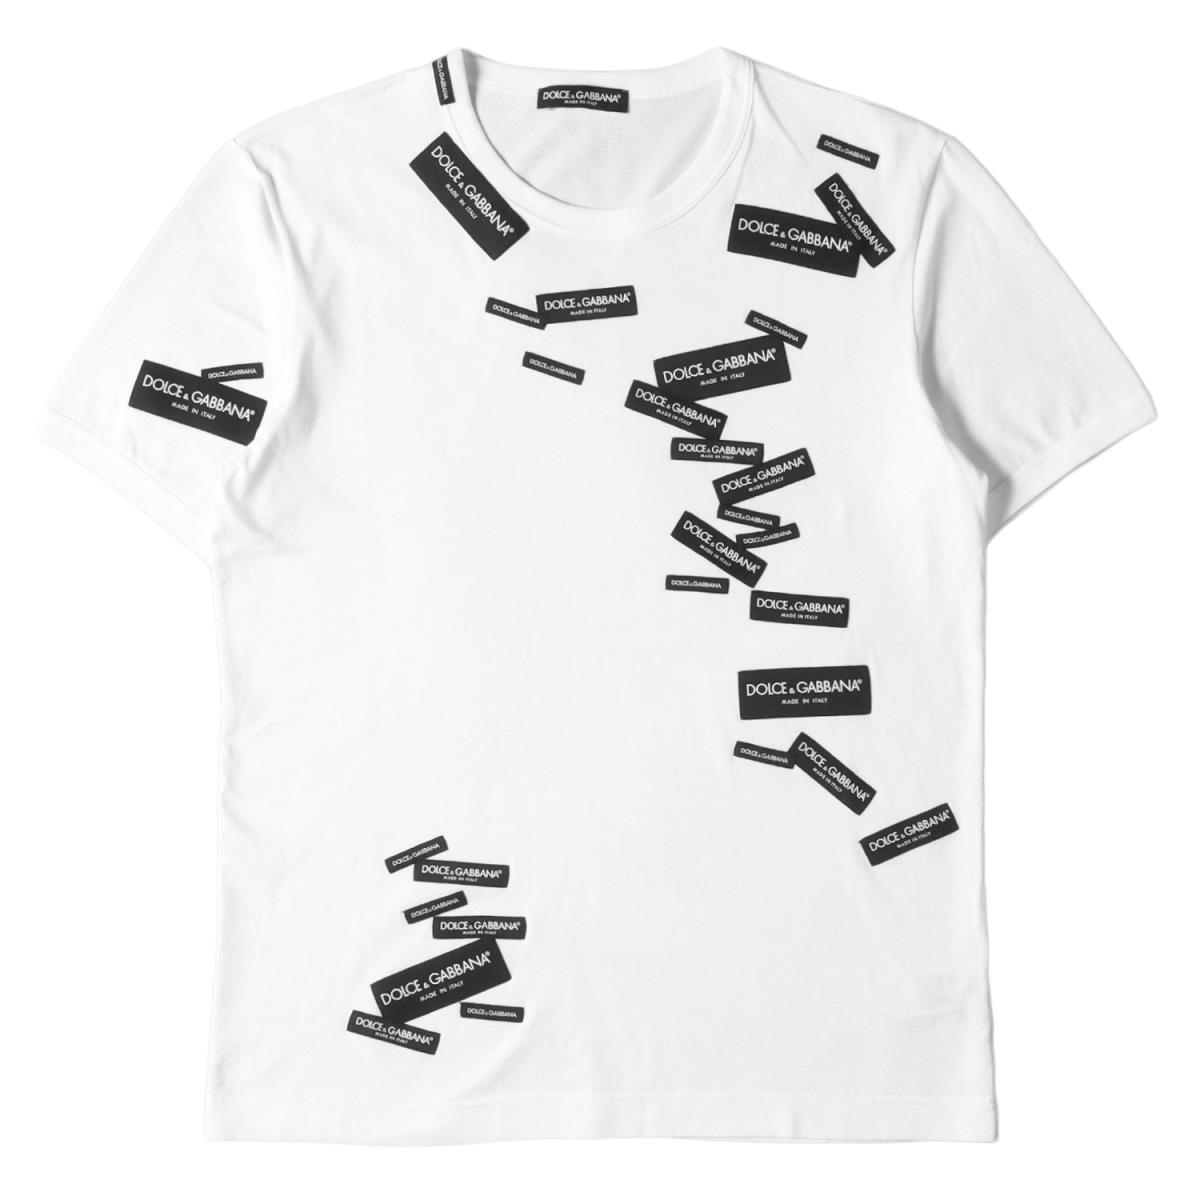 DOLCEGABBANA ドルチェガッバーナ ロゴ 半袖Tシャツ 白 最安値に挑戦 